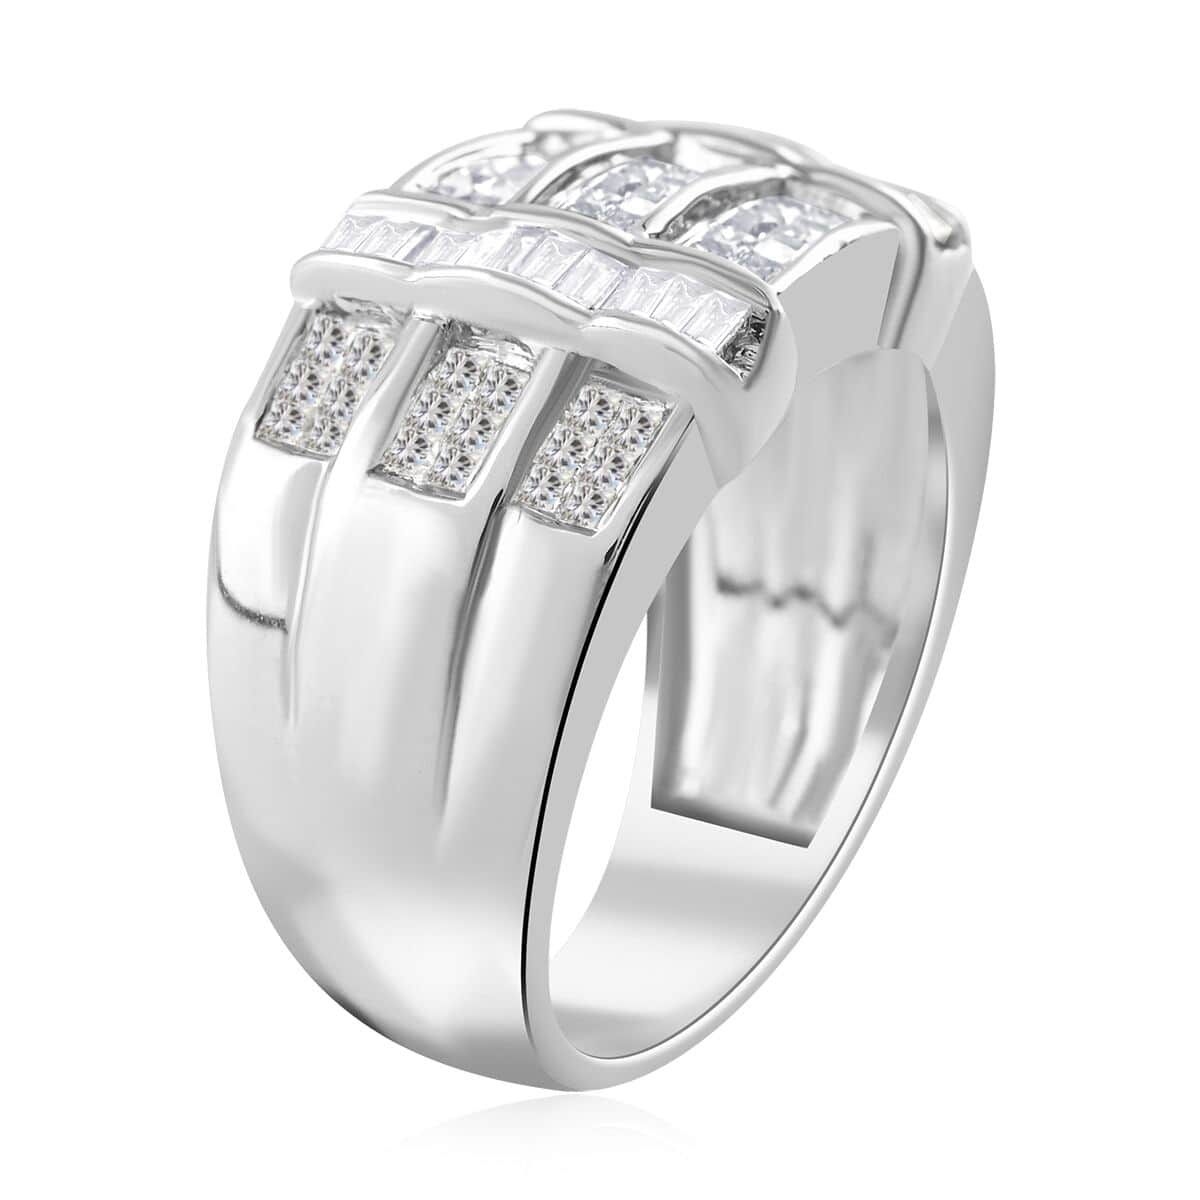 14K White Gold Diamond (G-H, I1) Ring (Size 10.0) (7.60 g) (Del. in 10-15 Days) 1.00 ctw image number 3